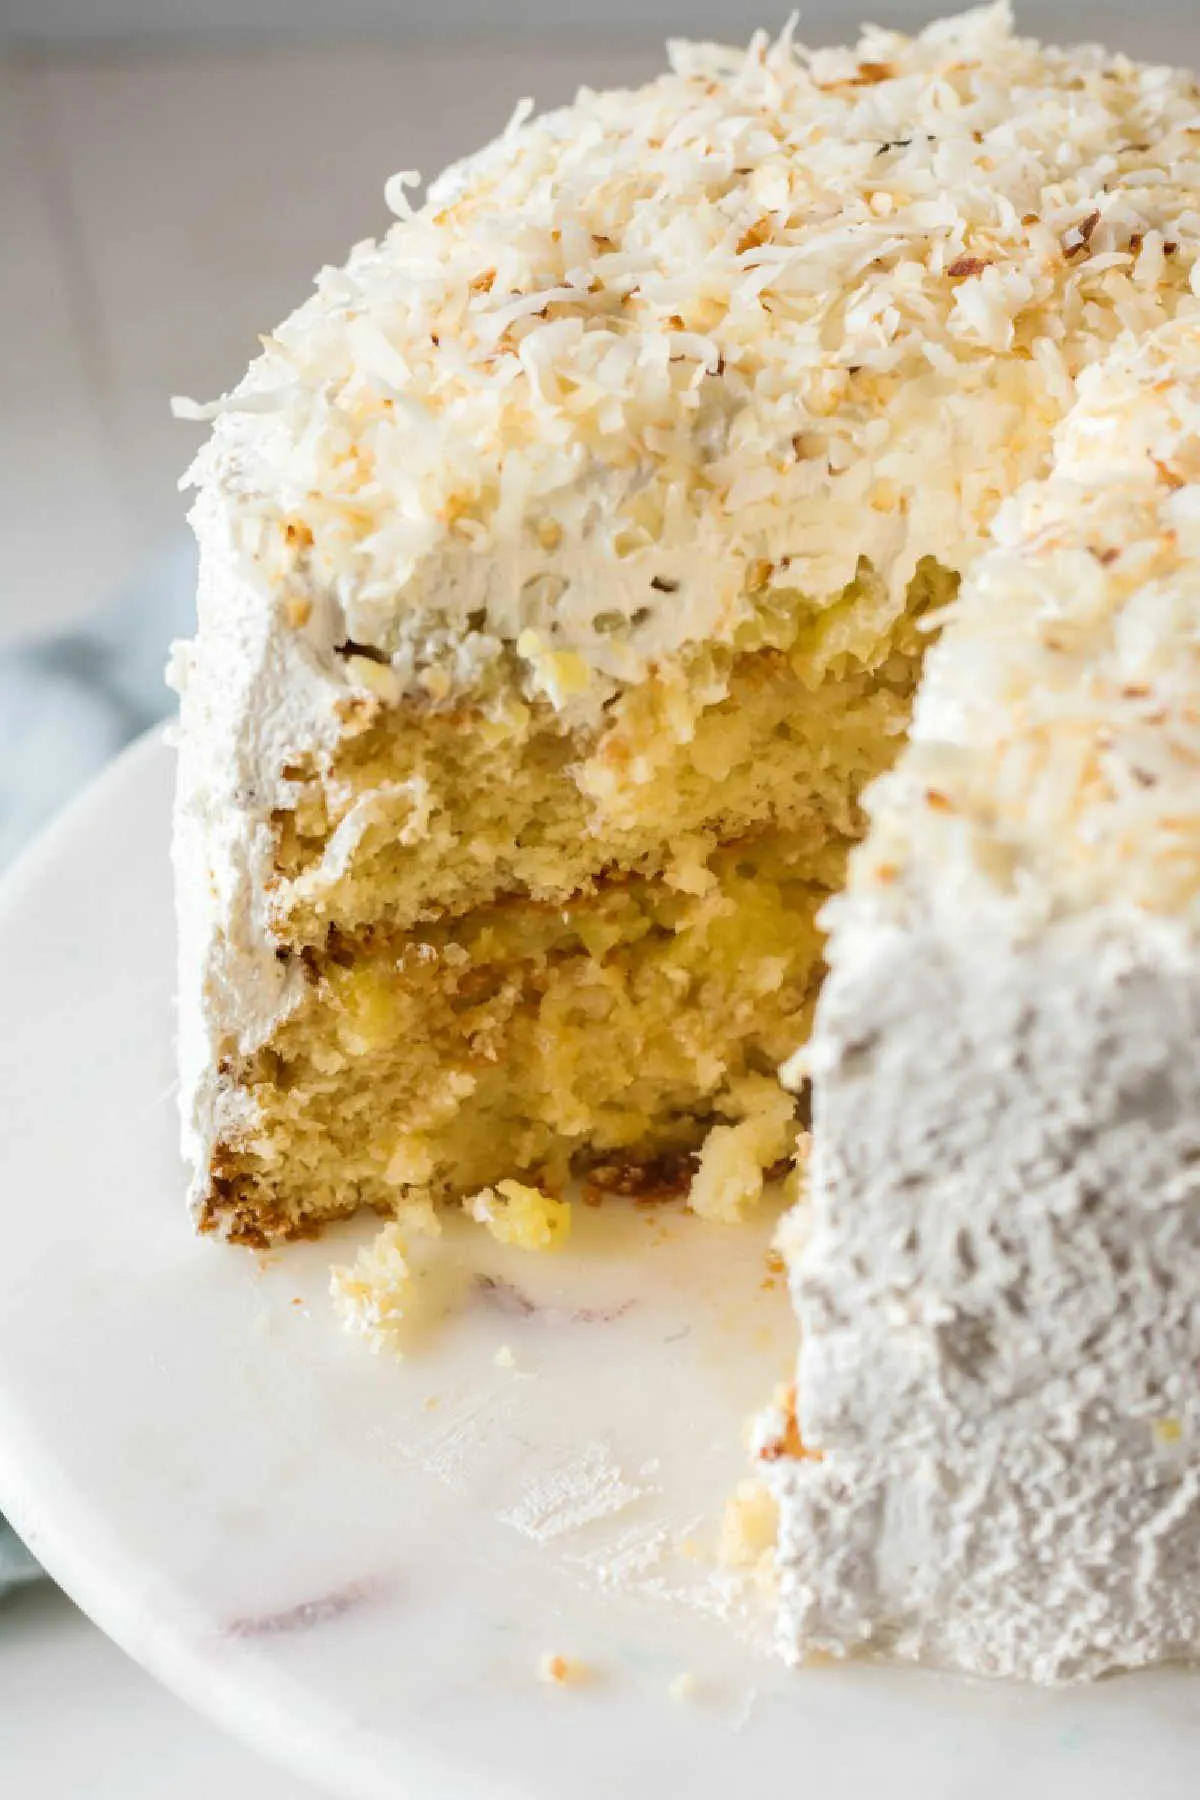 Inside of haleakala cake showing white cake, pineapple filling, fluffy white frosting and toasted coconut.